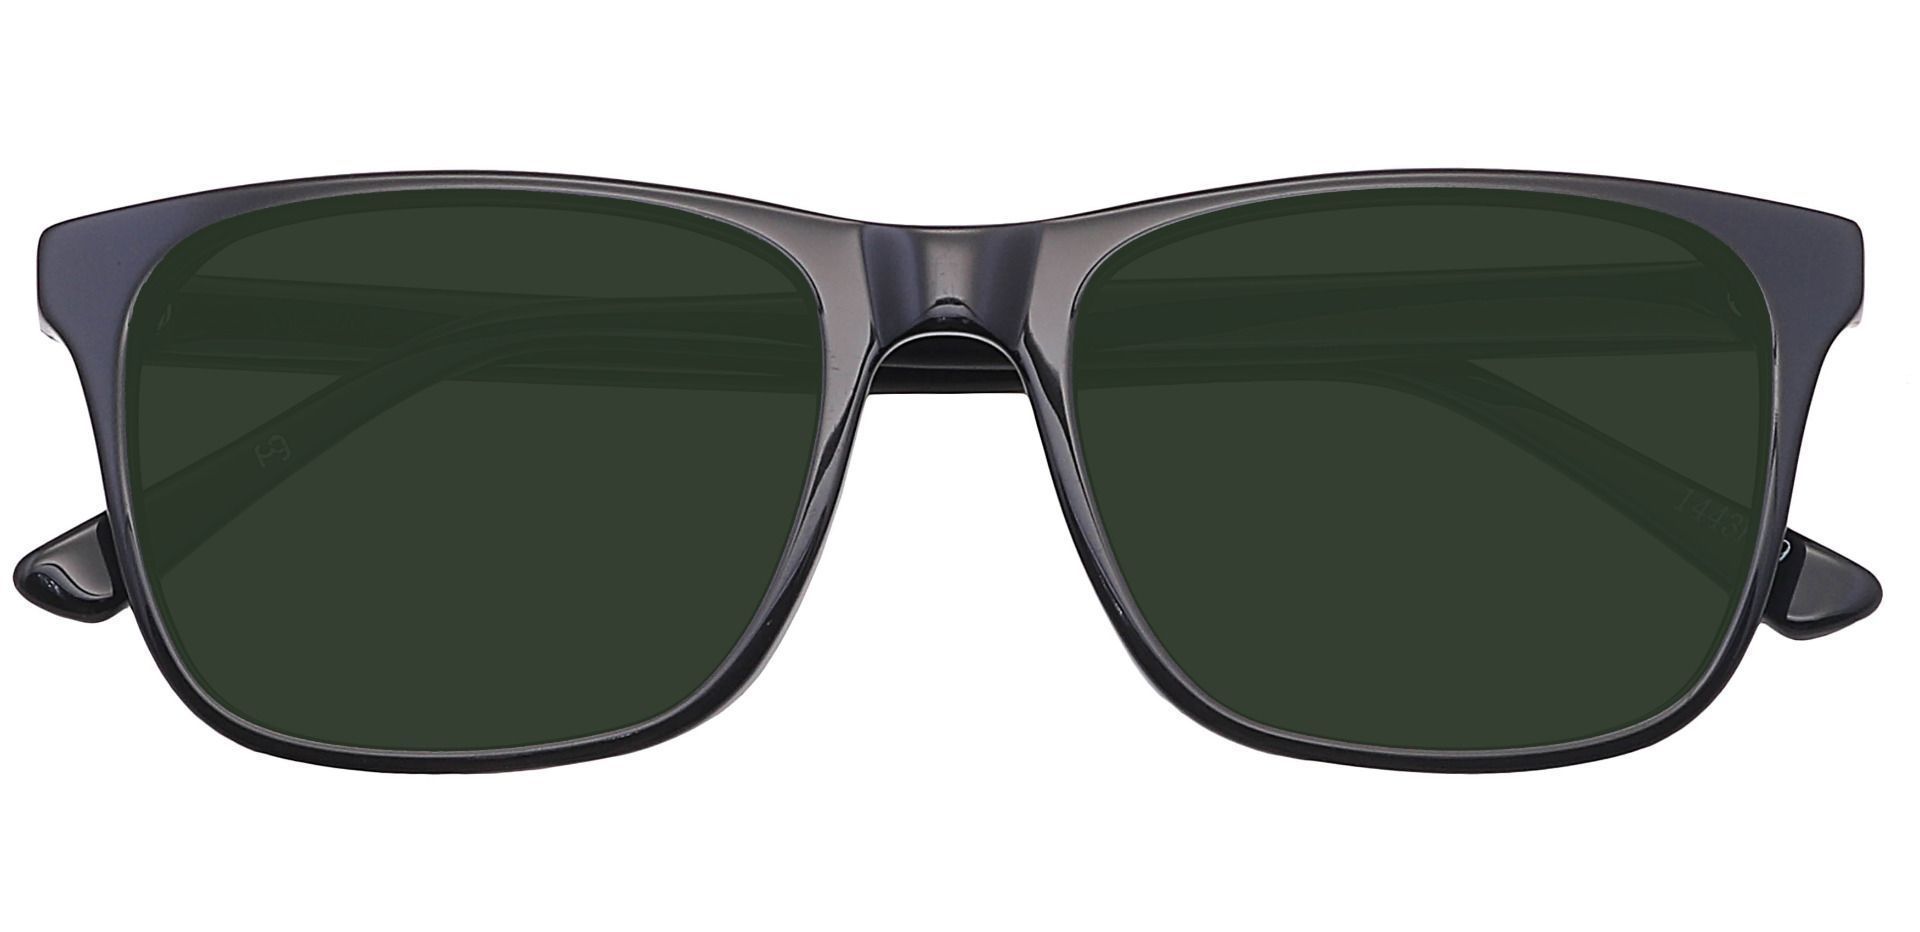 Cantina Square Progressive Sunglasses - Black Frame With Green Lenses